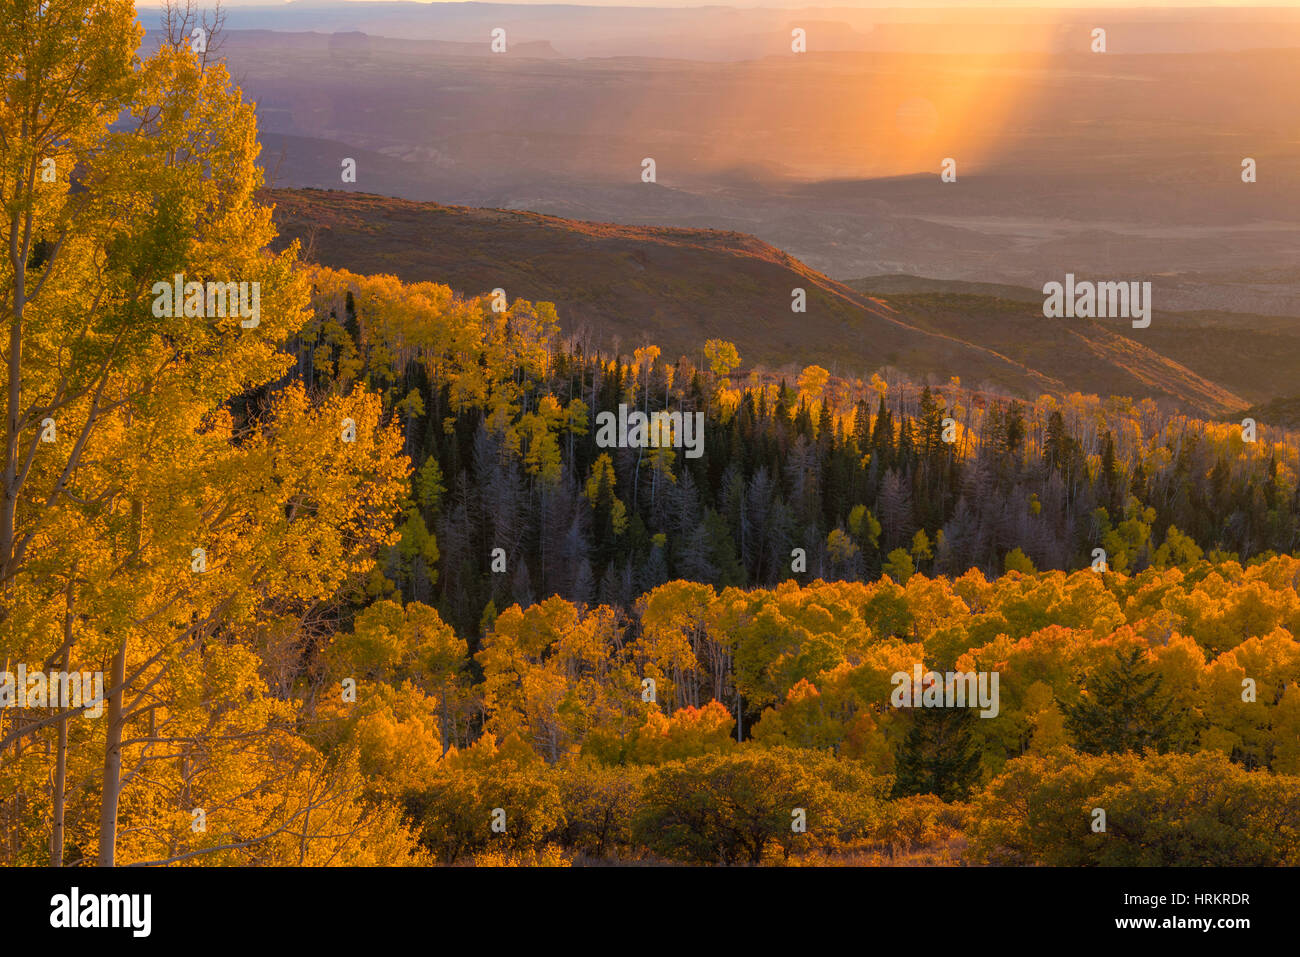 Espen und Regen in der Wüste, La Sal Mountains, Utah Manti-La Sal National Forest Beben Aspen, Populus tremuloides Stockfoto